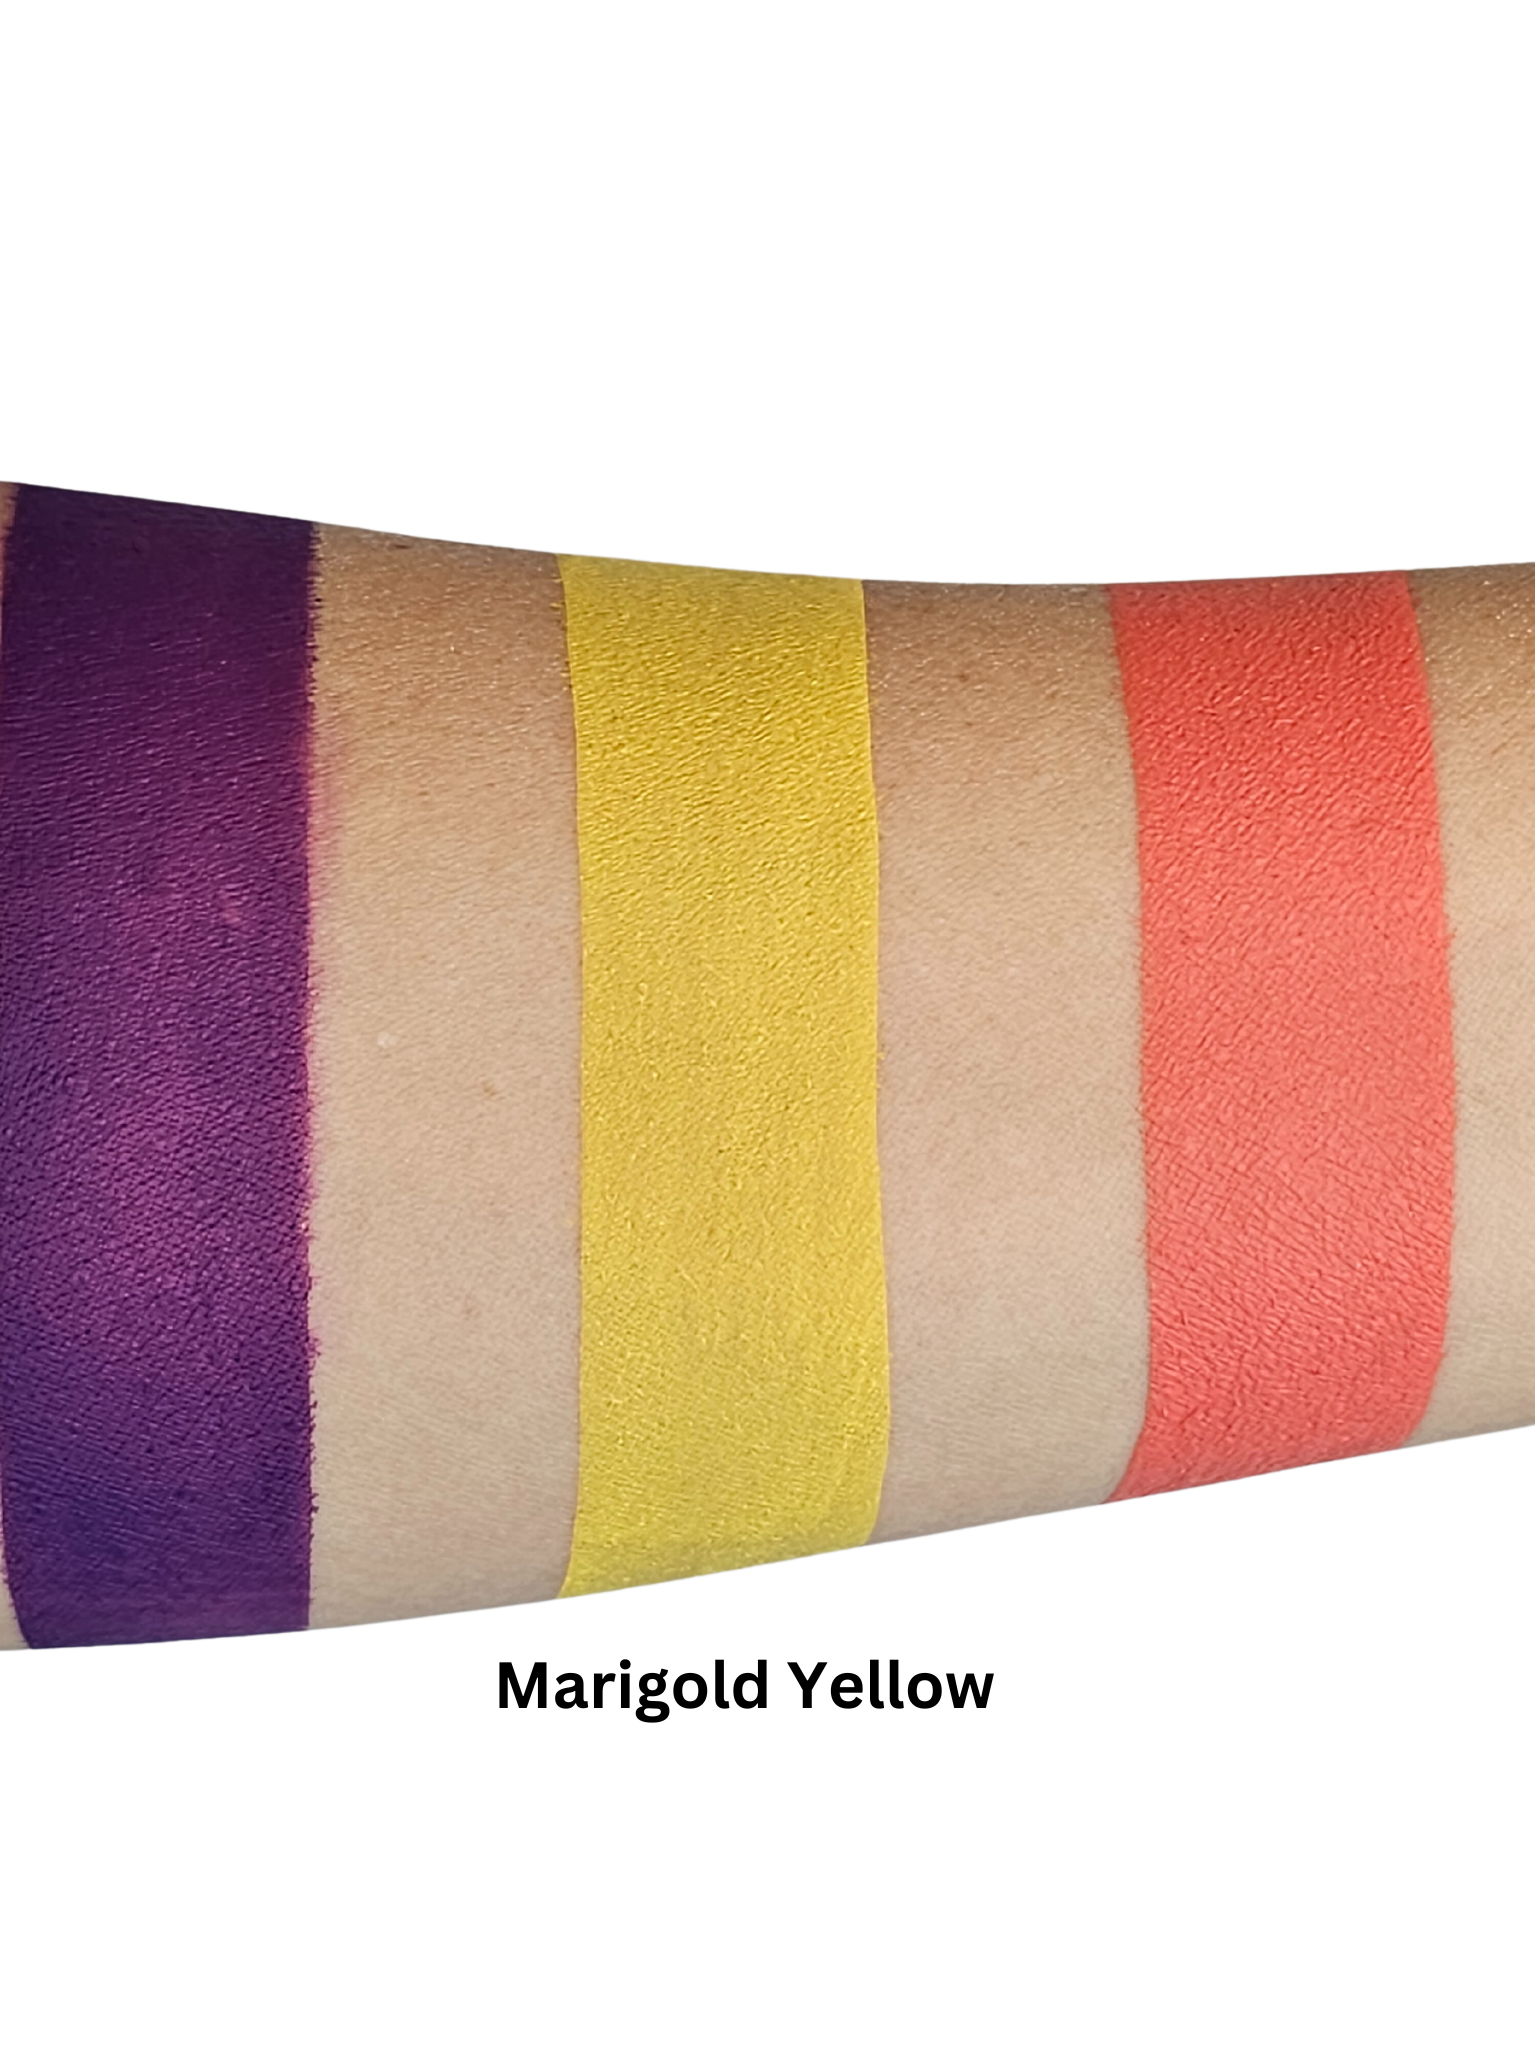 Fusion Body Art Face Paint - Prime Marigold Yellow  32g